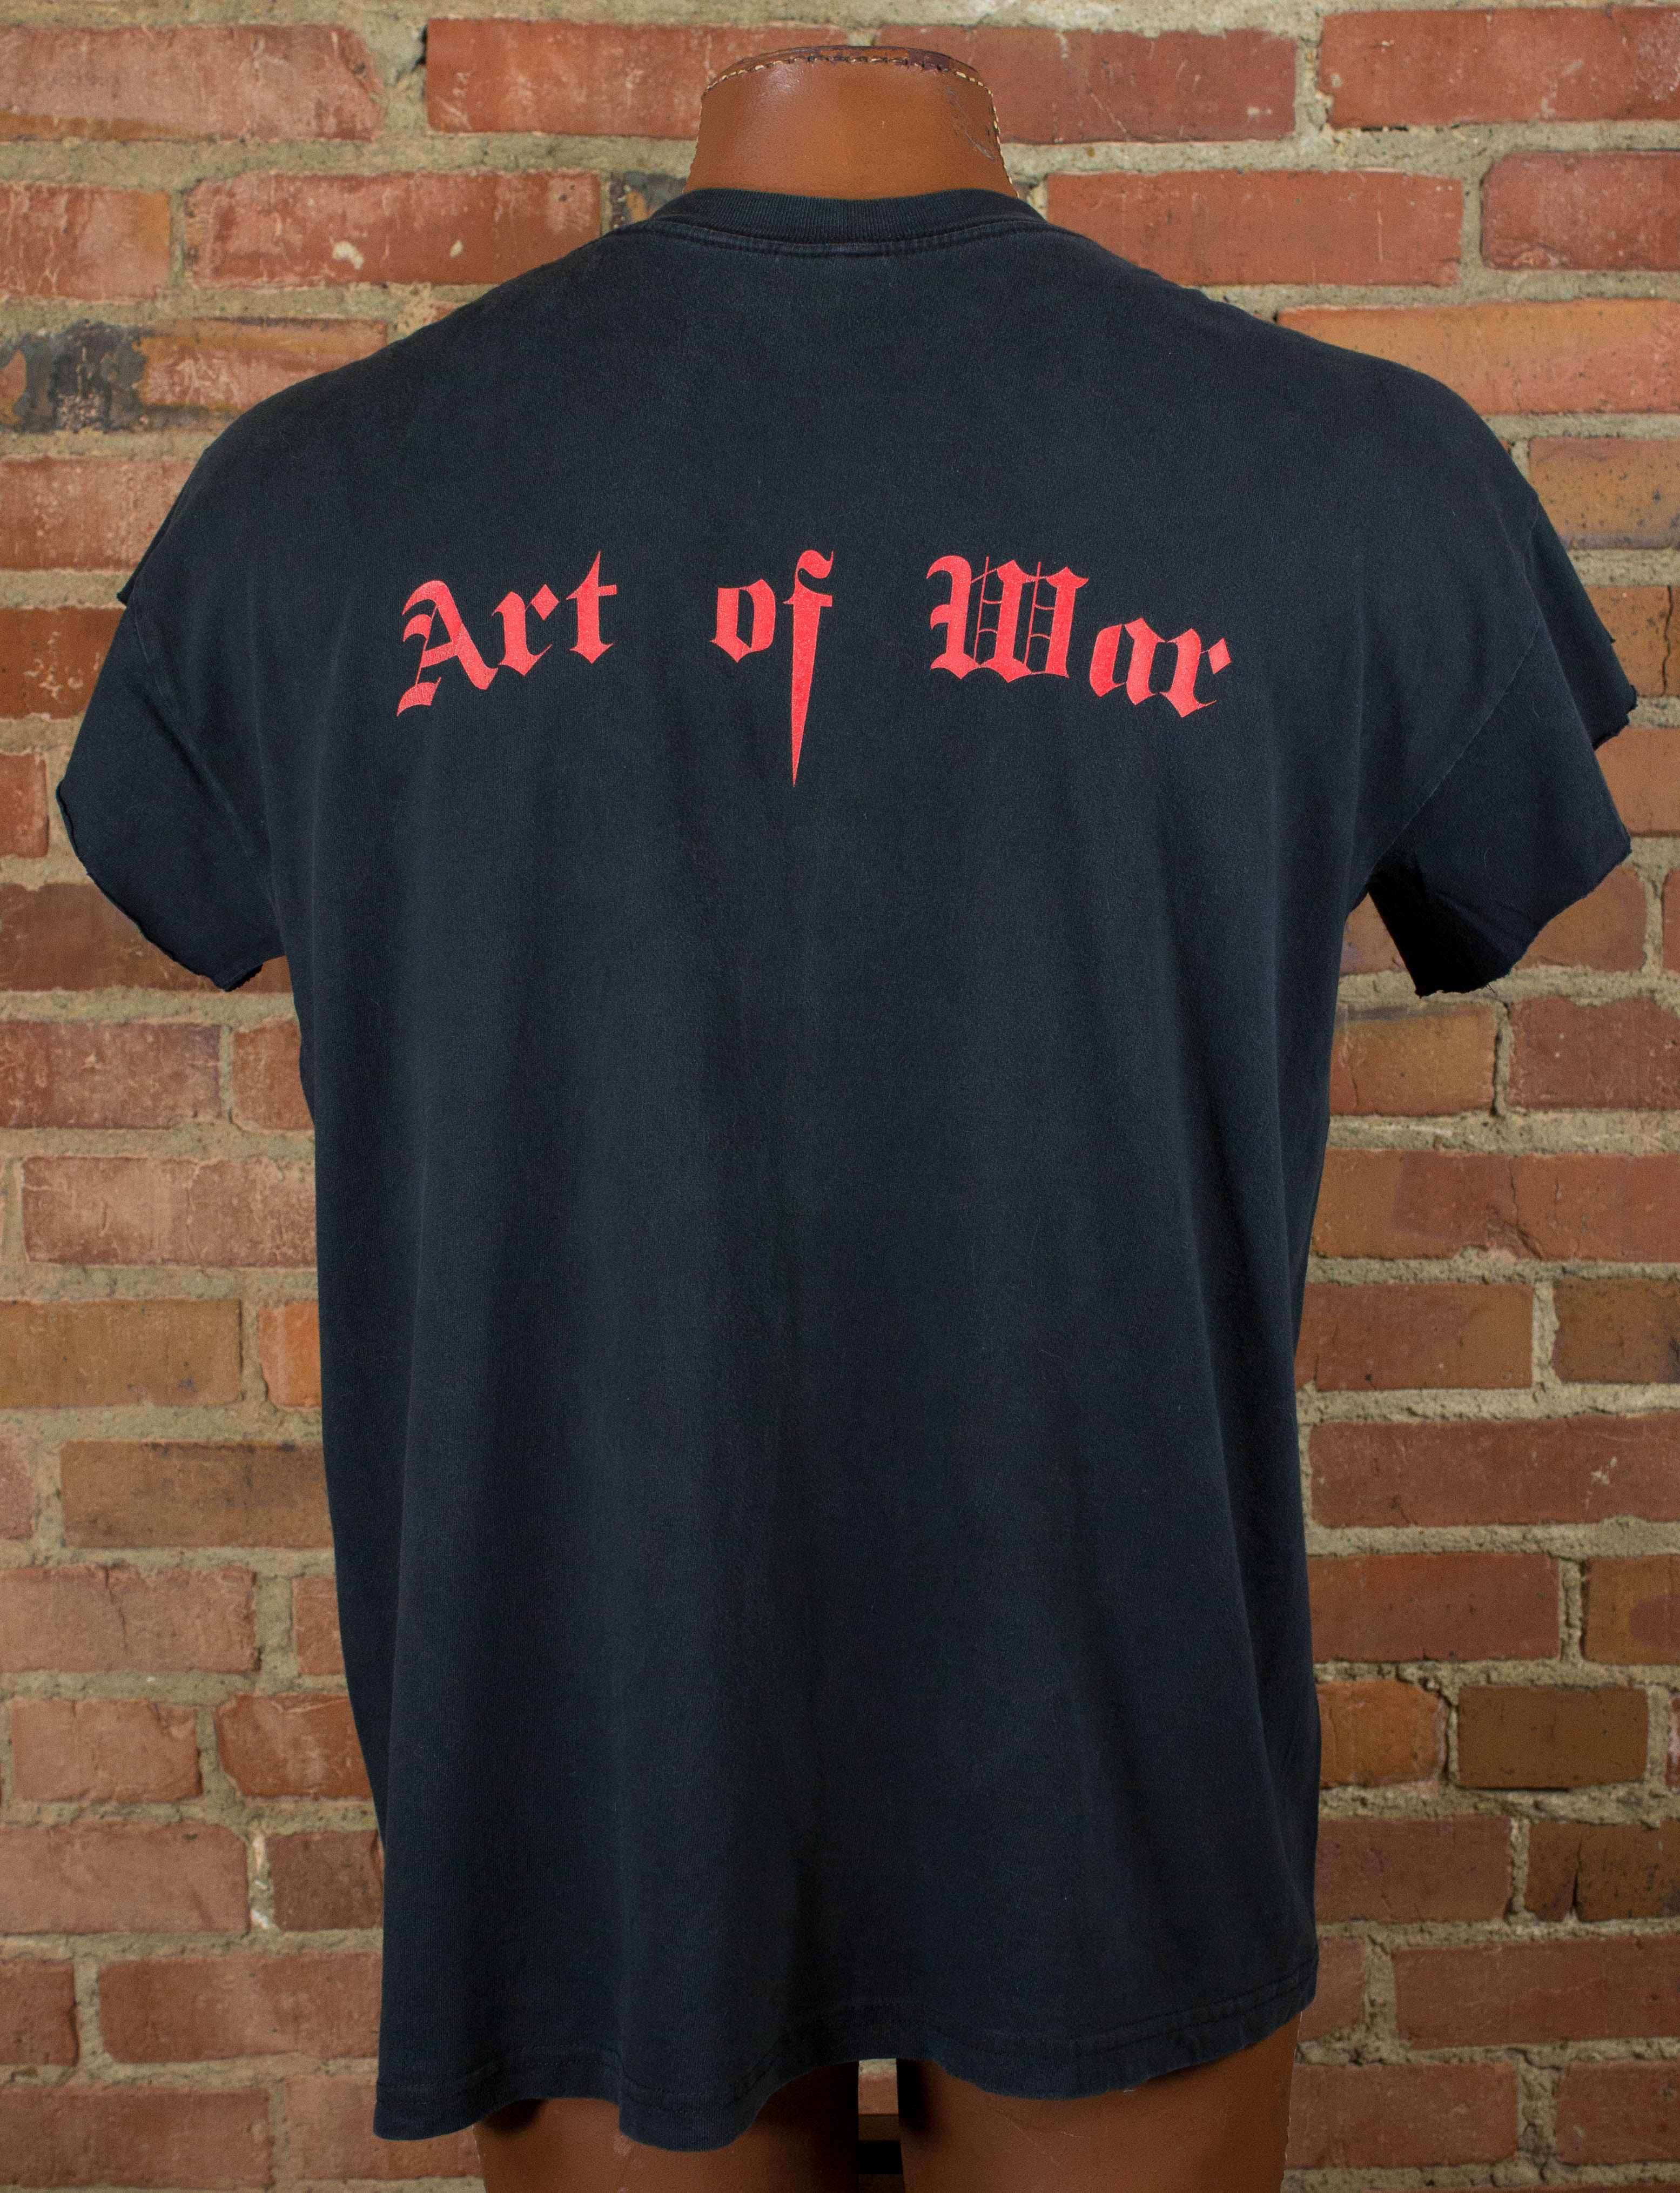 Bone Thugs N Harmony 1997 Art Of War Rap Tee Concert T Shirt XL – Black  Shag Vintage